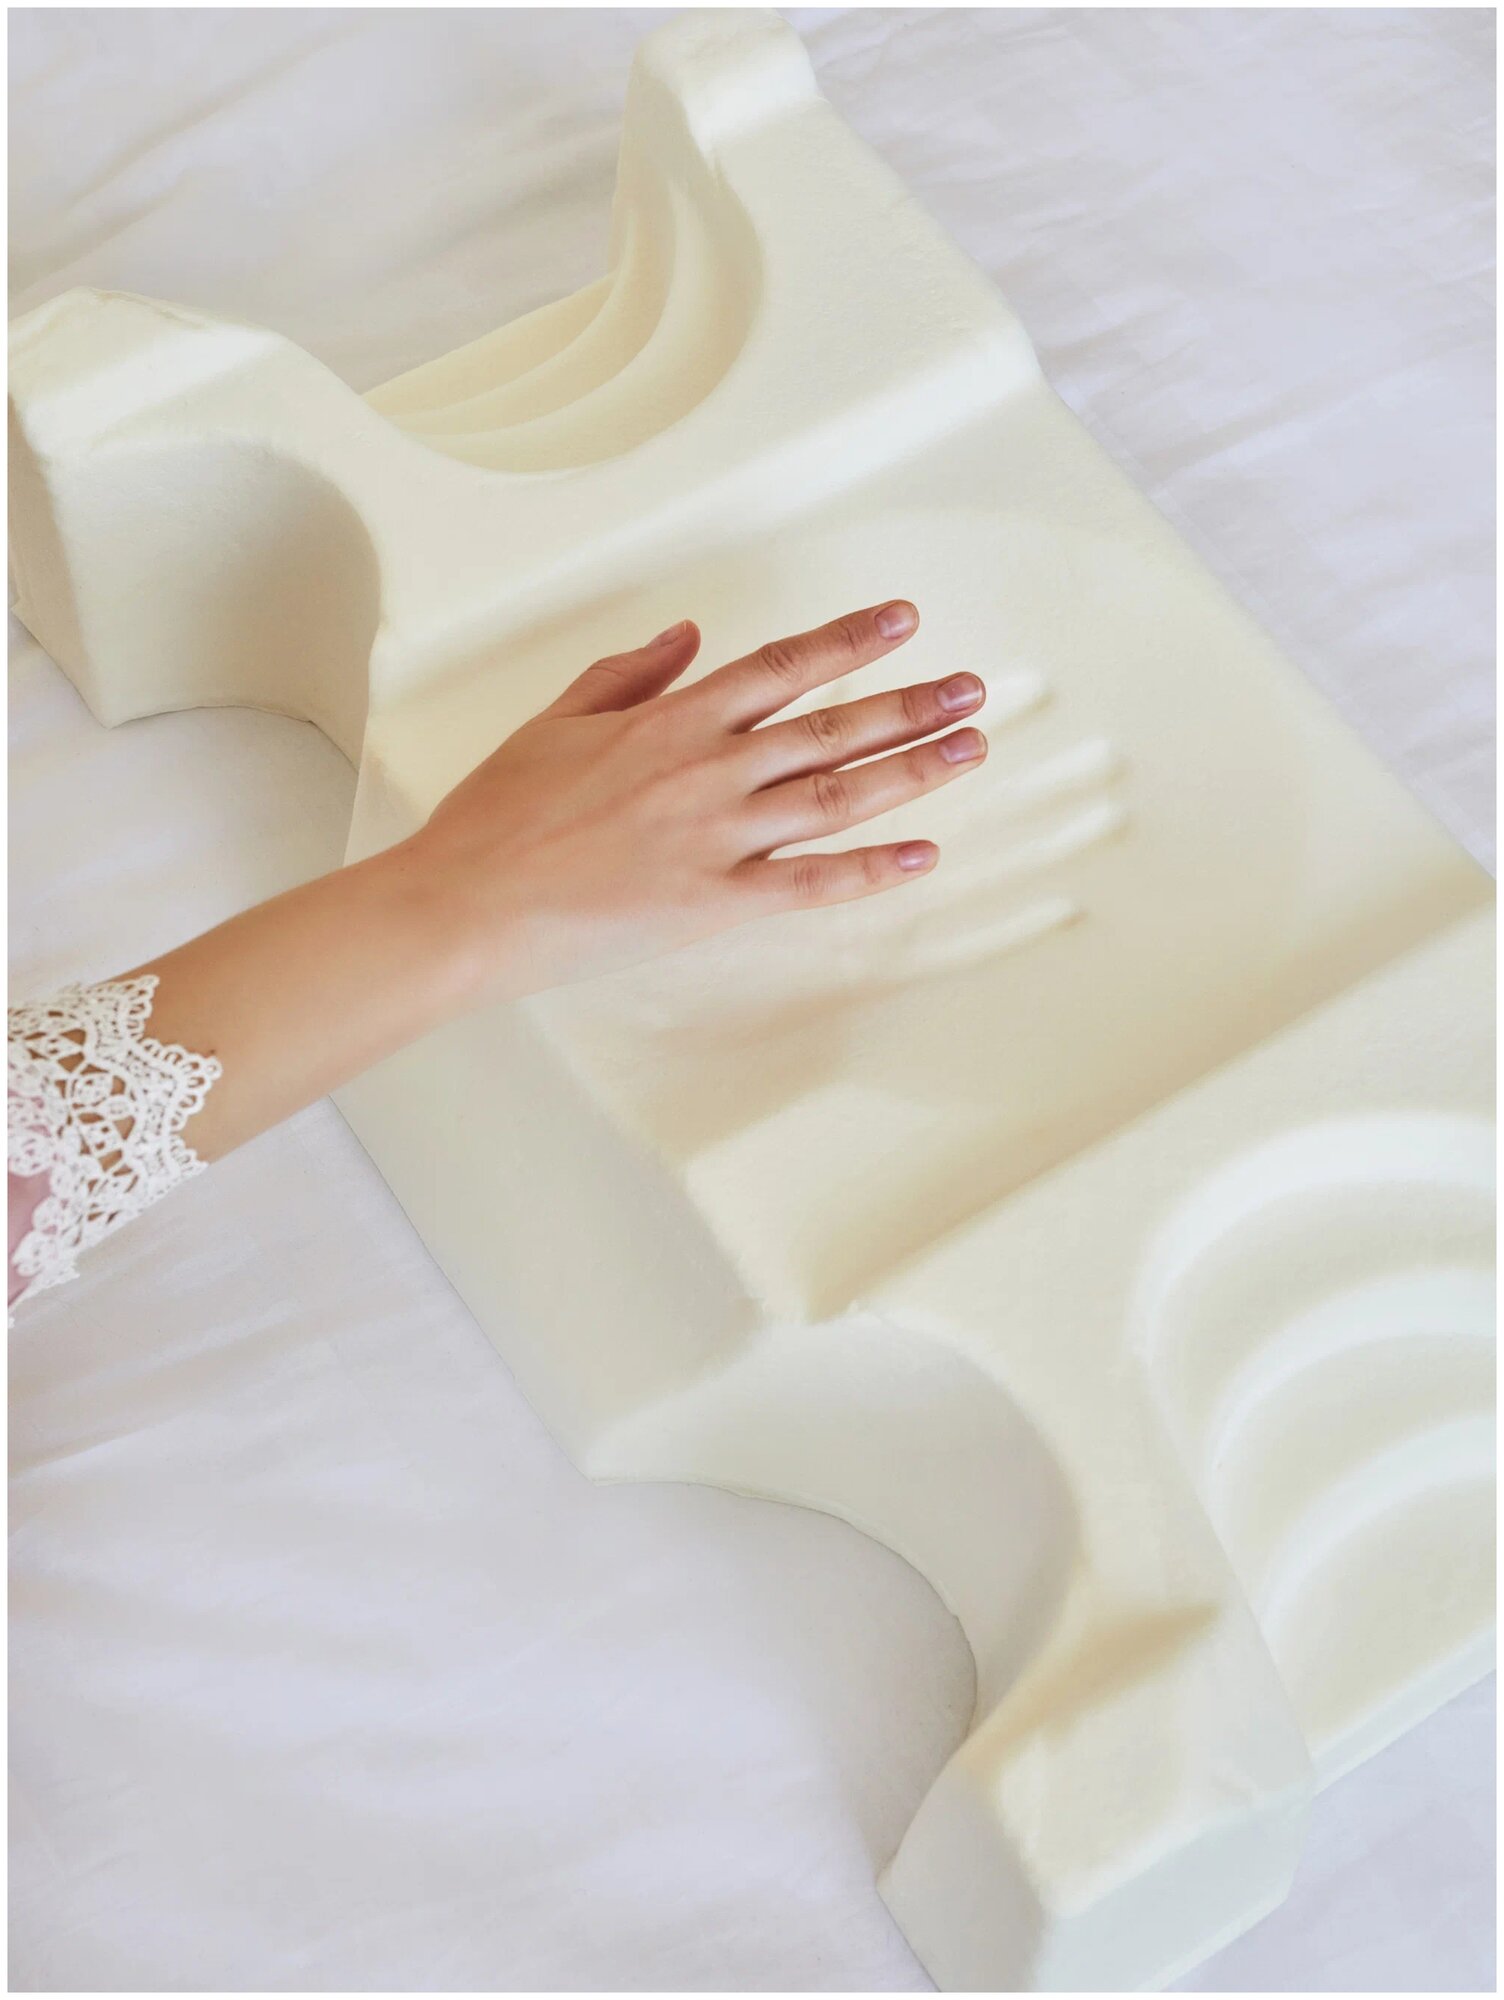 Подушка LoliDream против морщин, цвет белый - фотография № 5